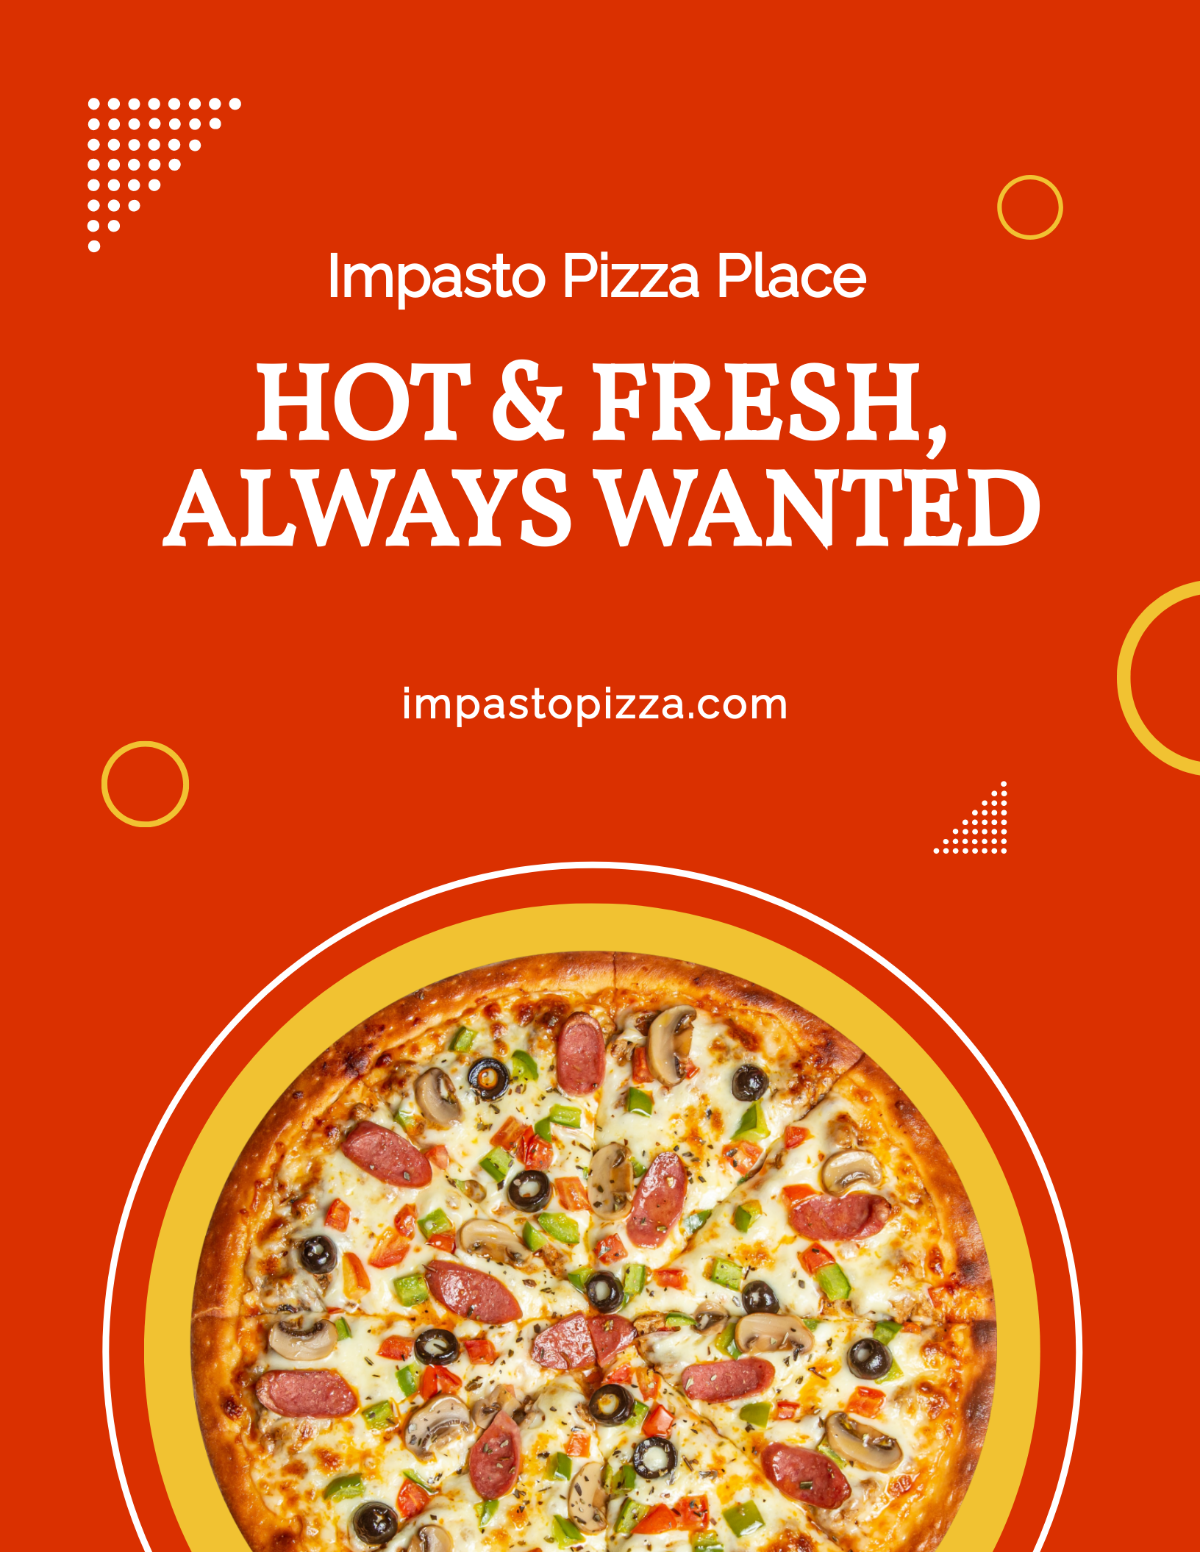 Pizza Advertisement Flyer Template